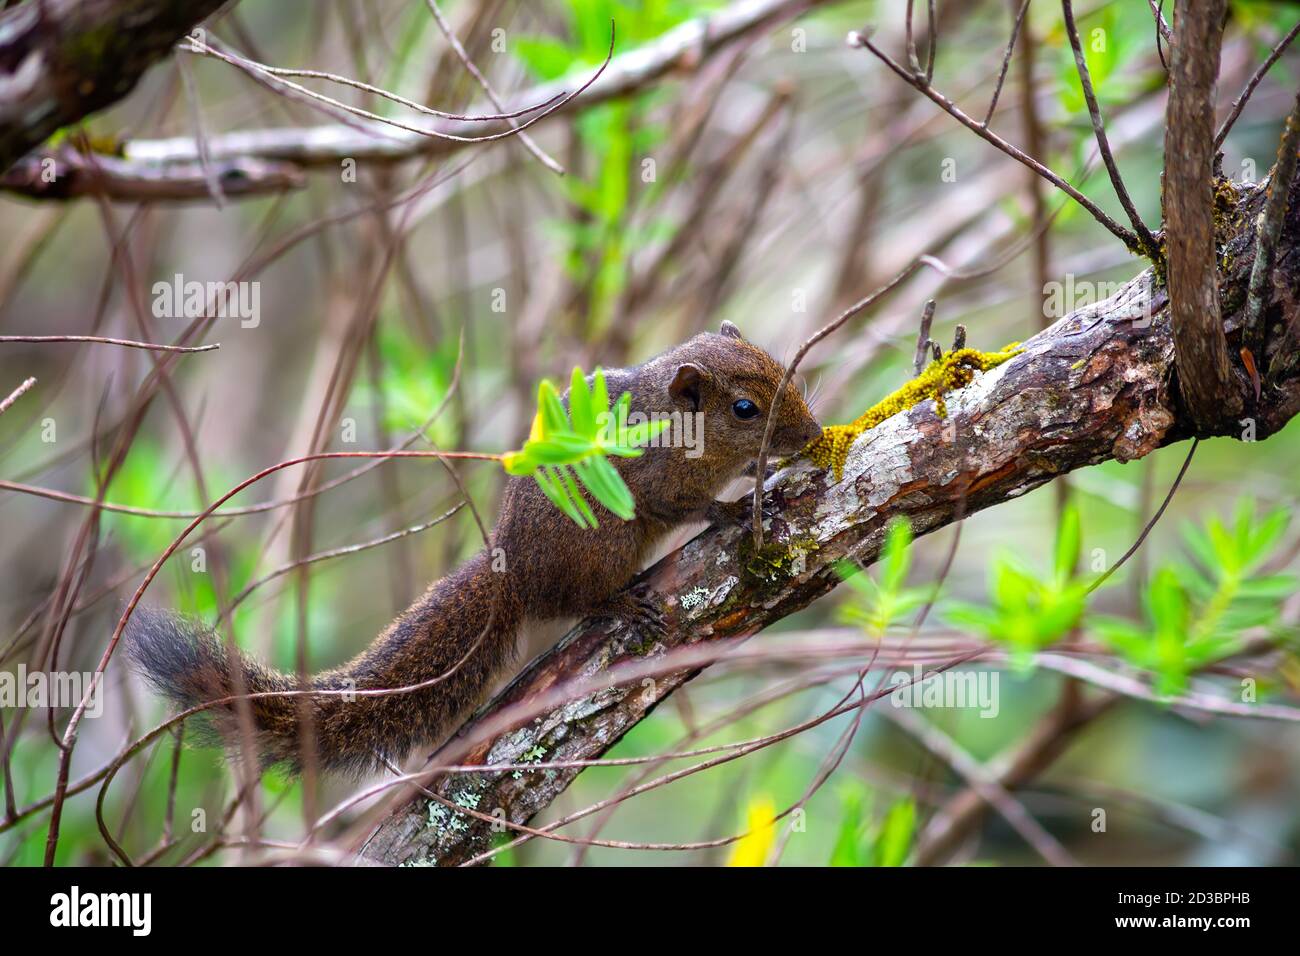 A chipmunk or palm squirrel sits on a tree branch. Sri Lanka Stock Photo